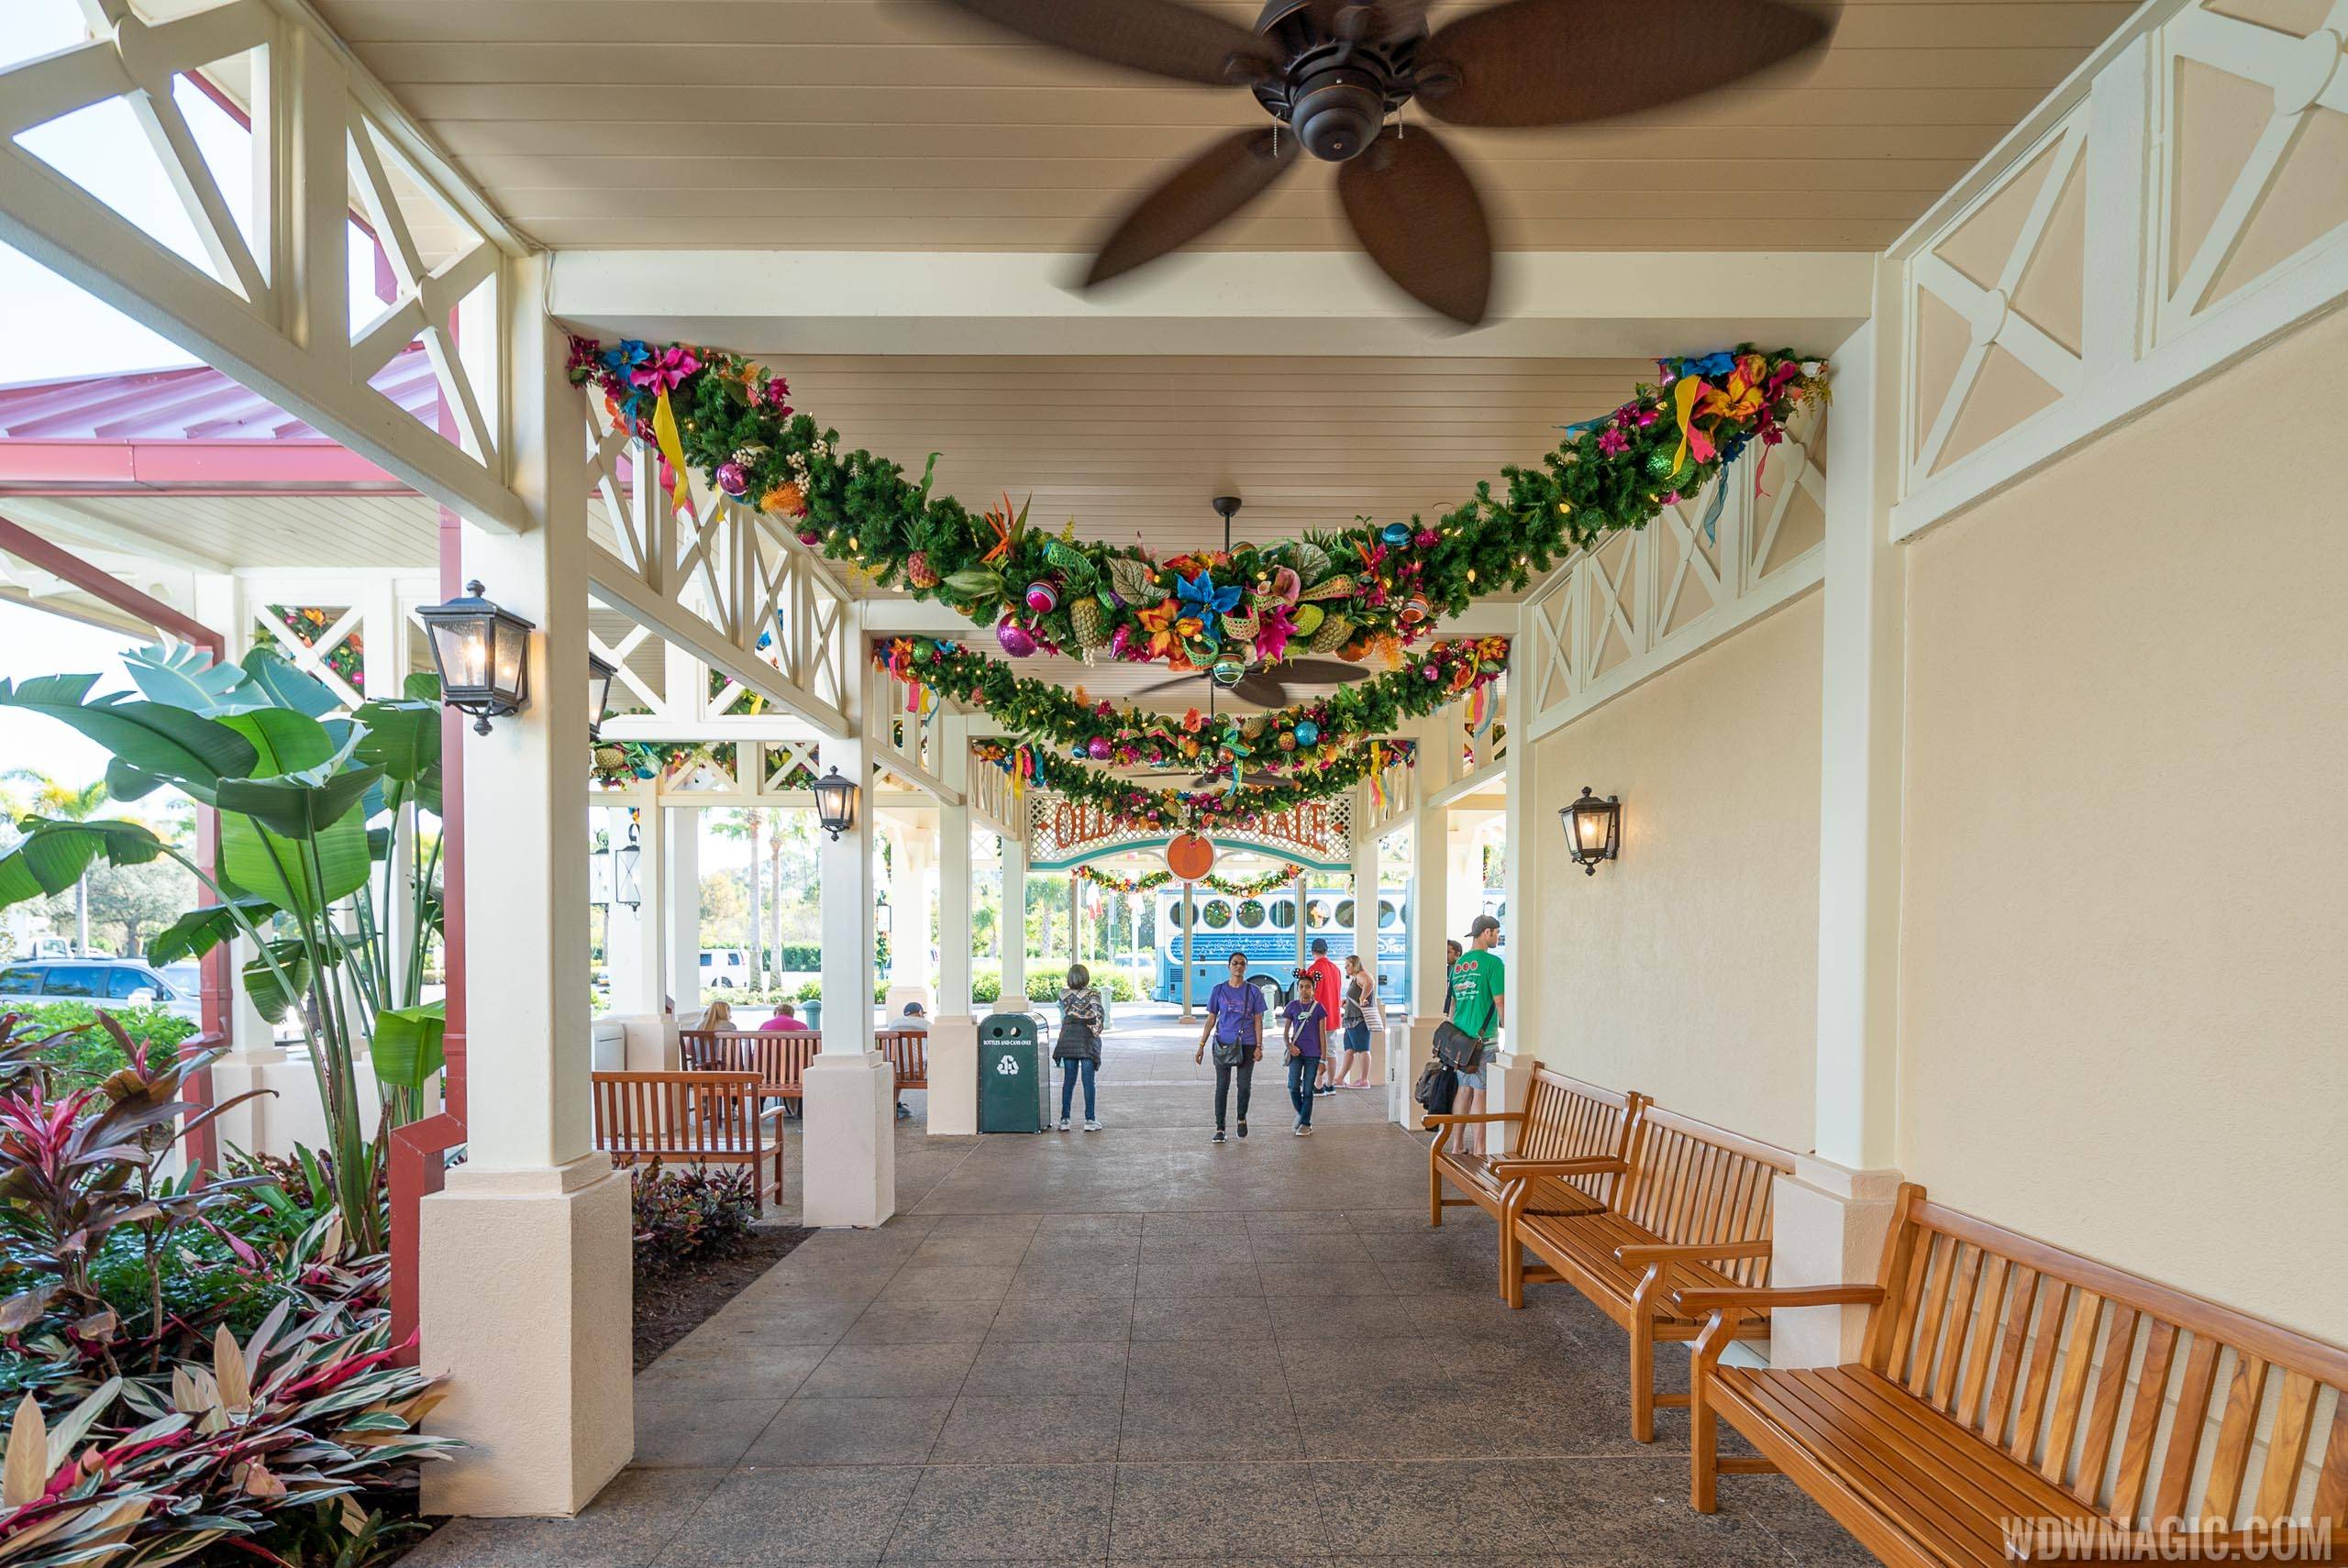 Disney's Caribbean Beach Resort Christmas Holiday Decor 2019 - Photo 4 of 10